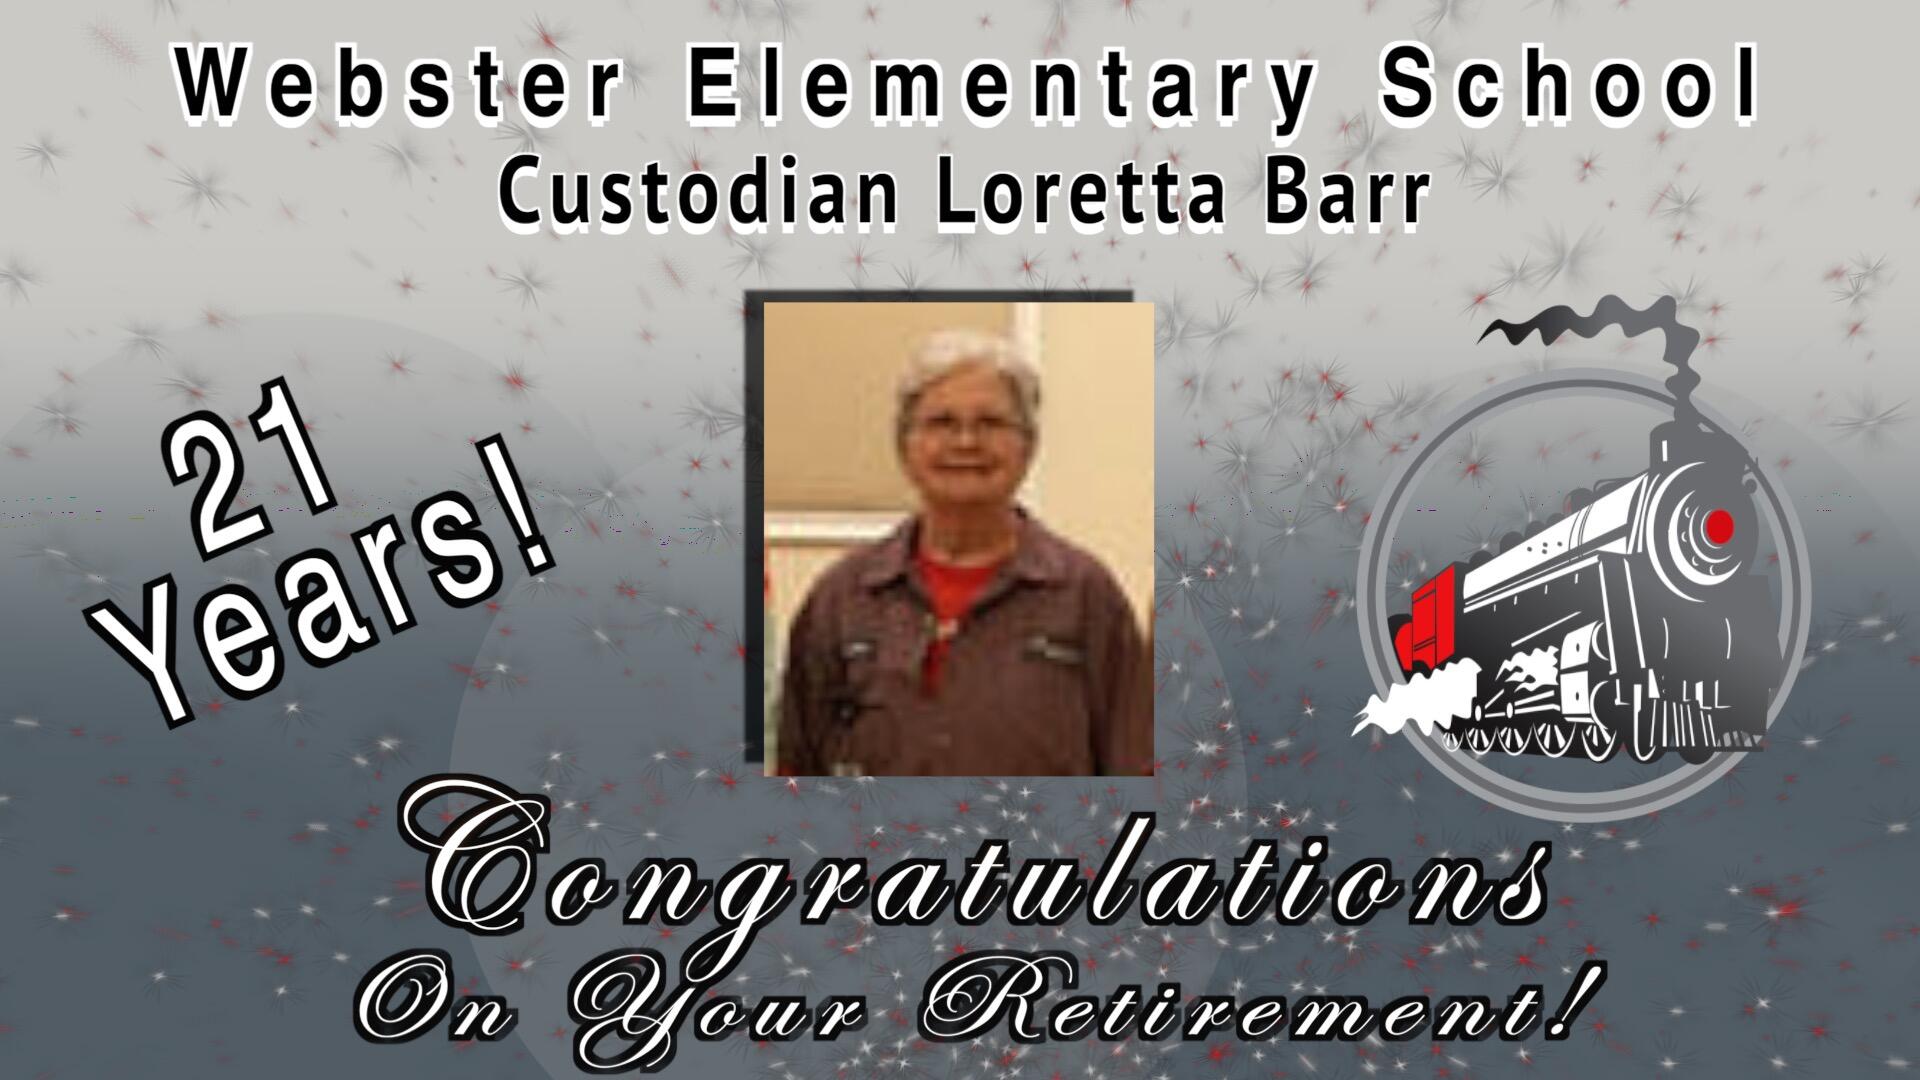 Webster Elementary School - Custodian Loreeta Barr with photo and Webster train logo